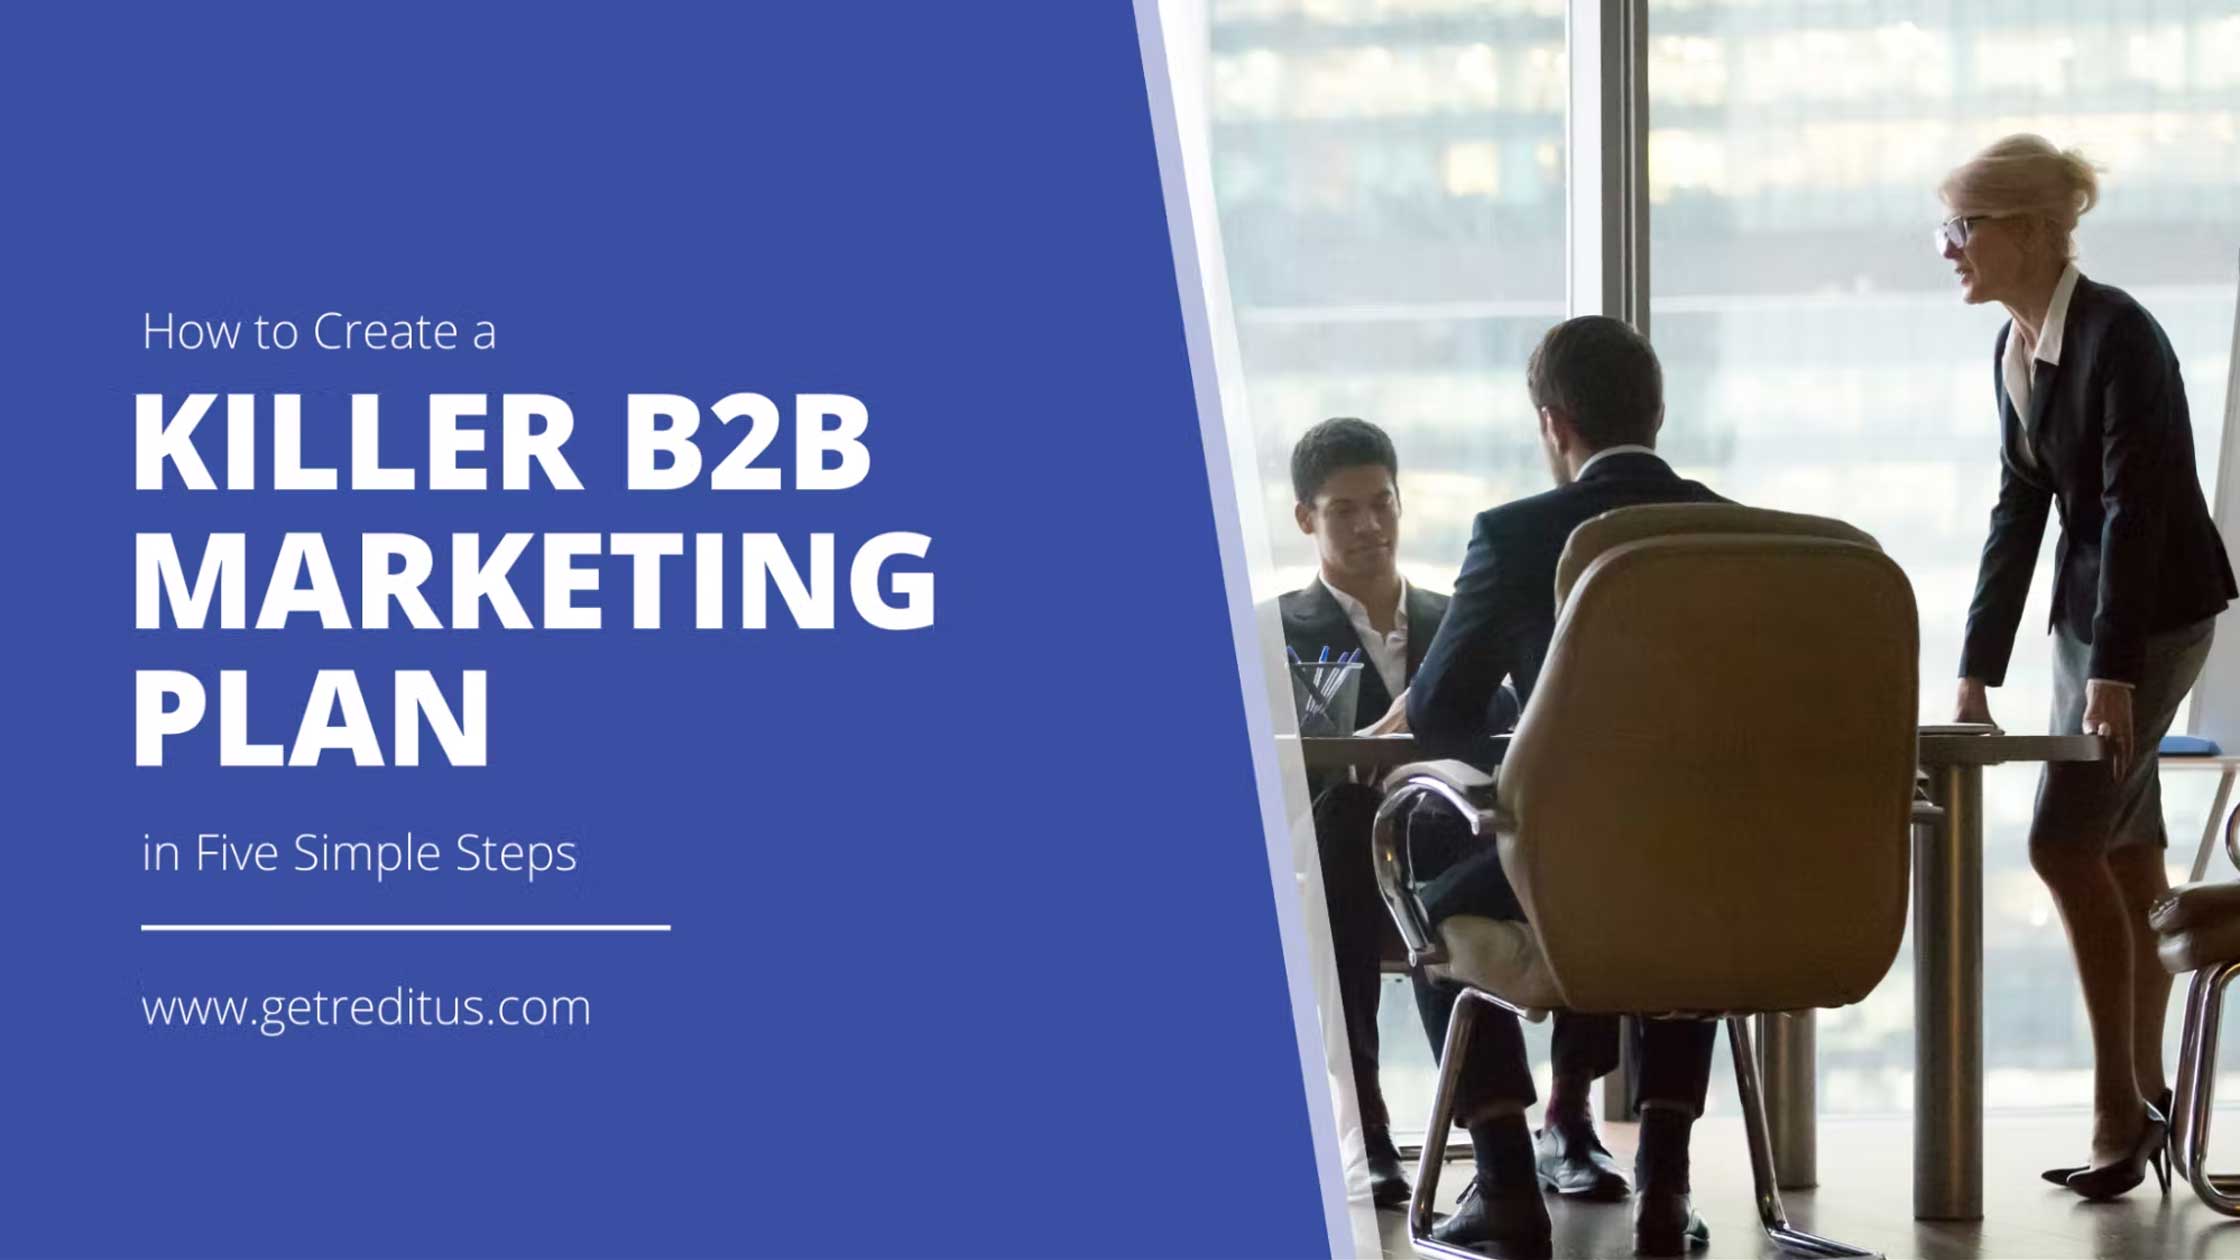 5 Simple Steps to Create a Killer B2B SaaS Marketing Plan.